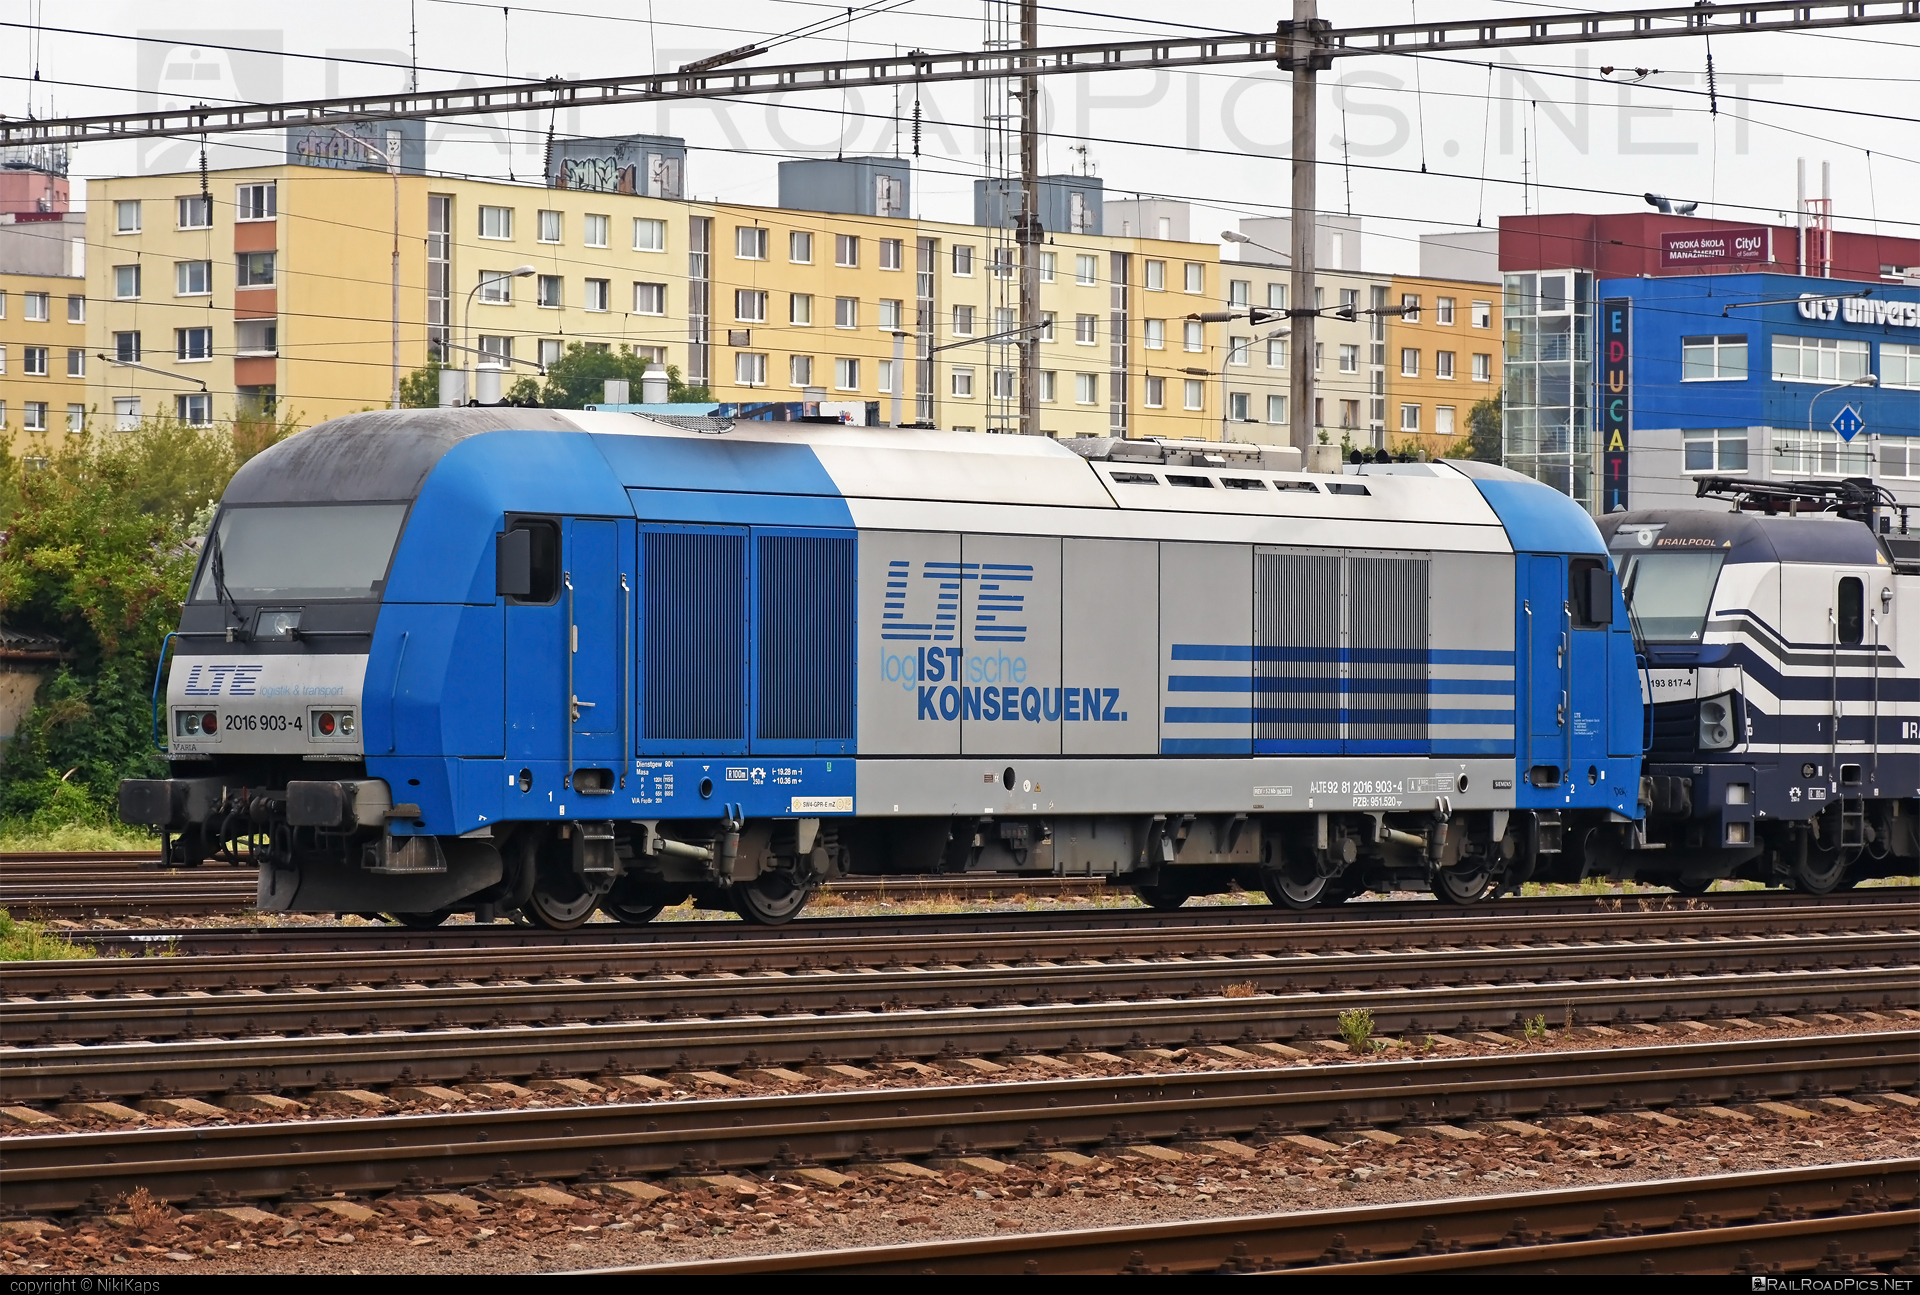 Siemens ER20 - 2016 903-4 operated by LTE Logistik und Transport GmbH #er20 #er20hercules #eurorunner #hercules #lte #ltelogistikundtransport #ltelogistikundtransportgmbh #siemens #siemenser20 #siemenser20hercules #siemenseurorunner #siemenshercules